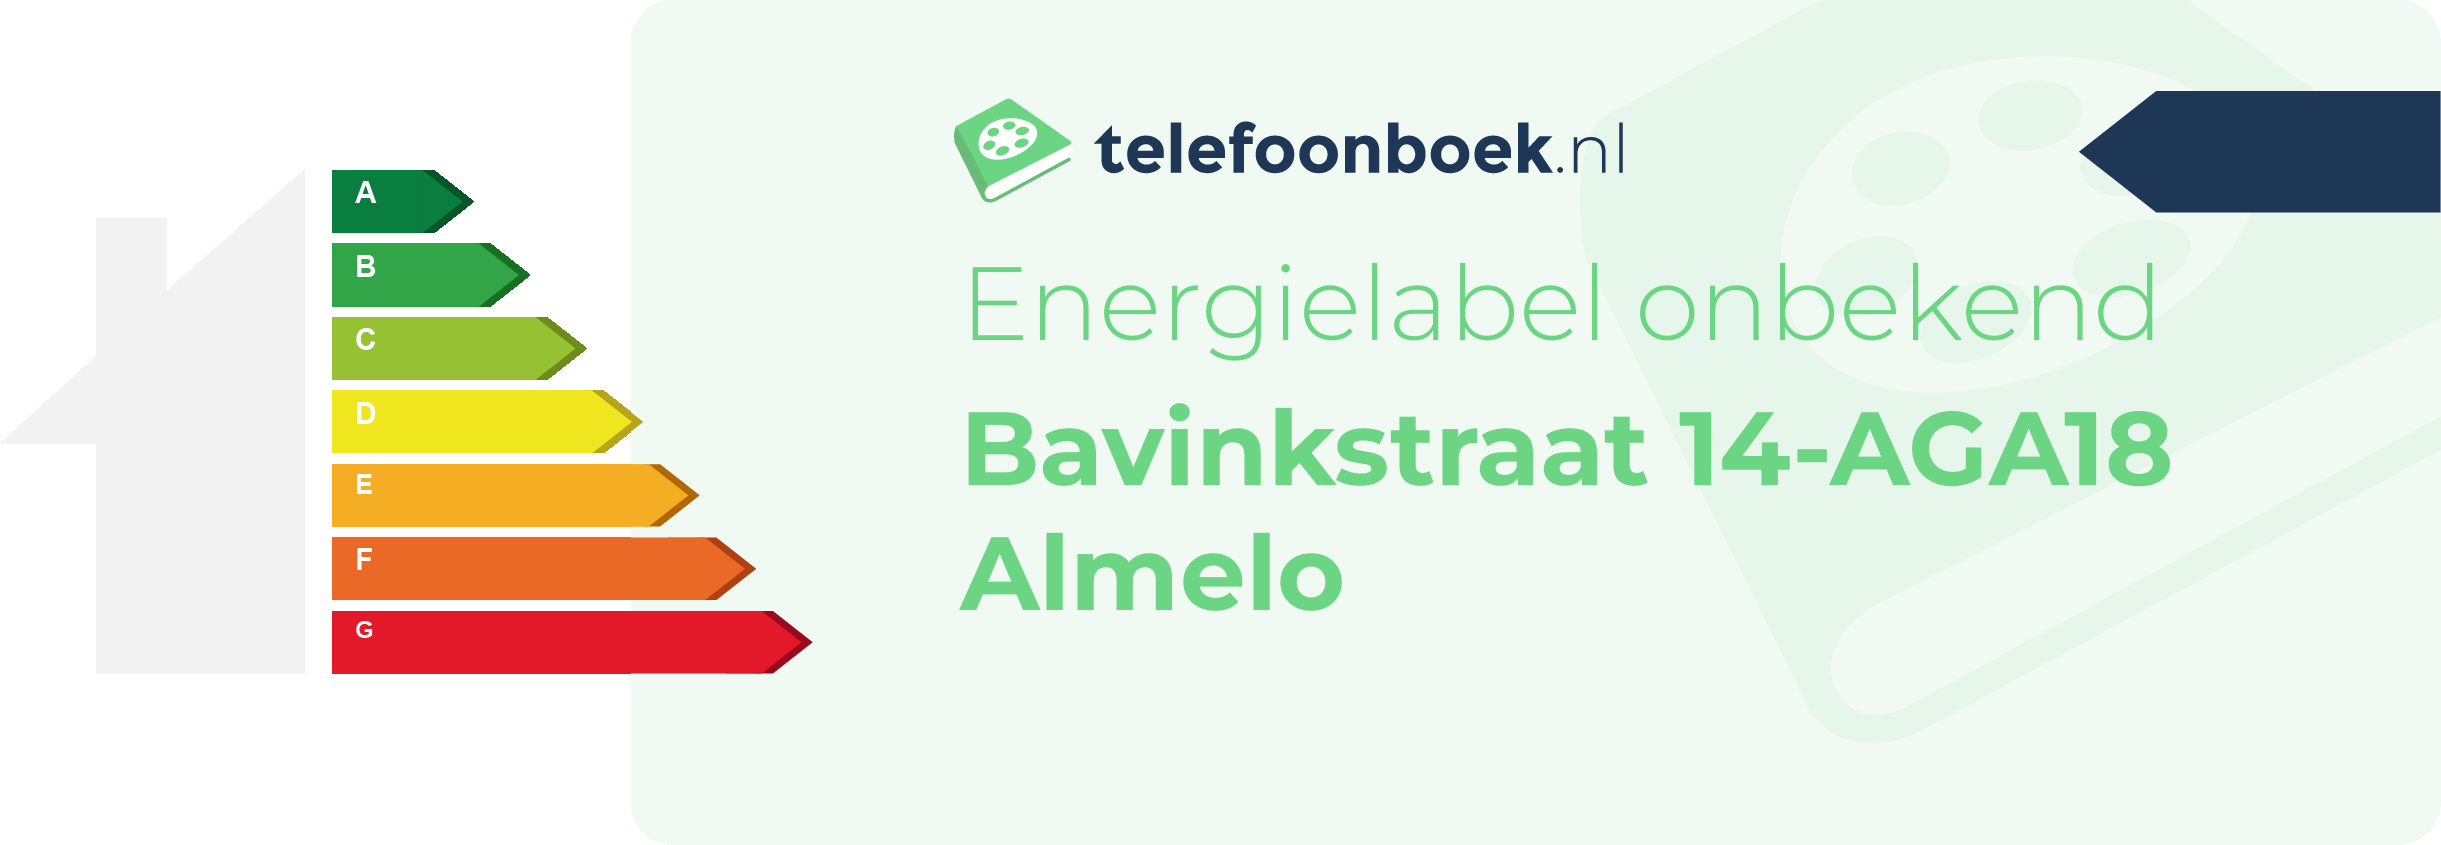 Energielabel Bavinkstraat 14-AGA18 Almelo